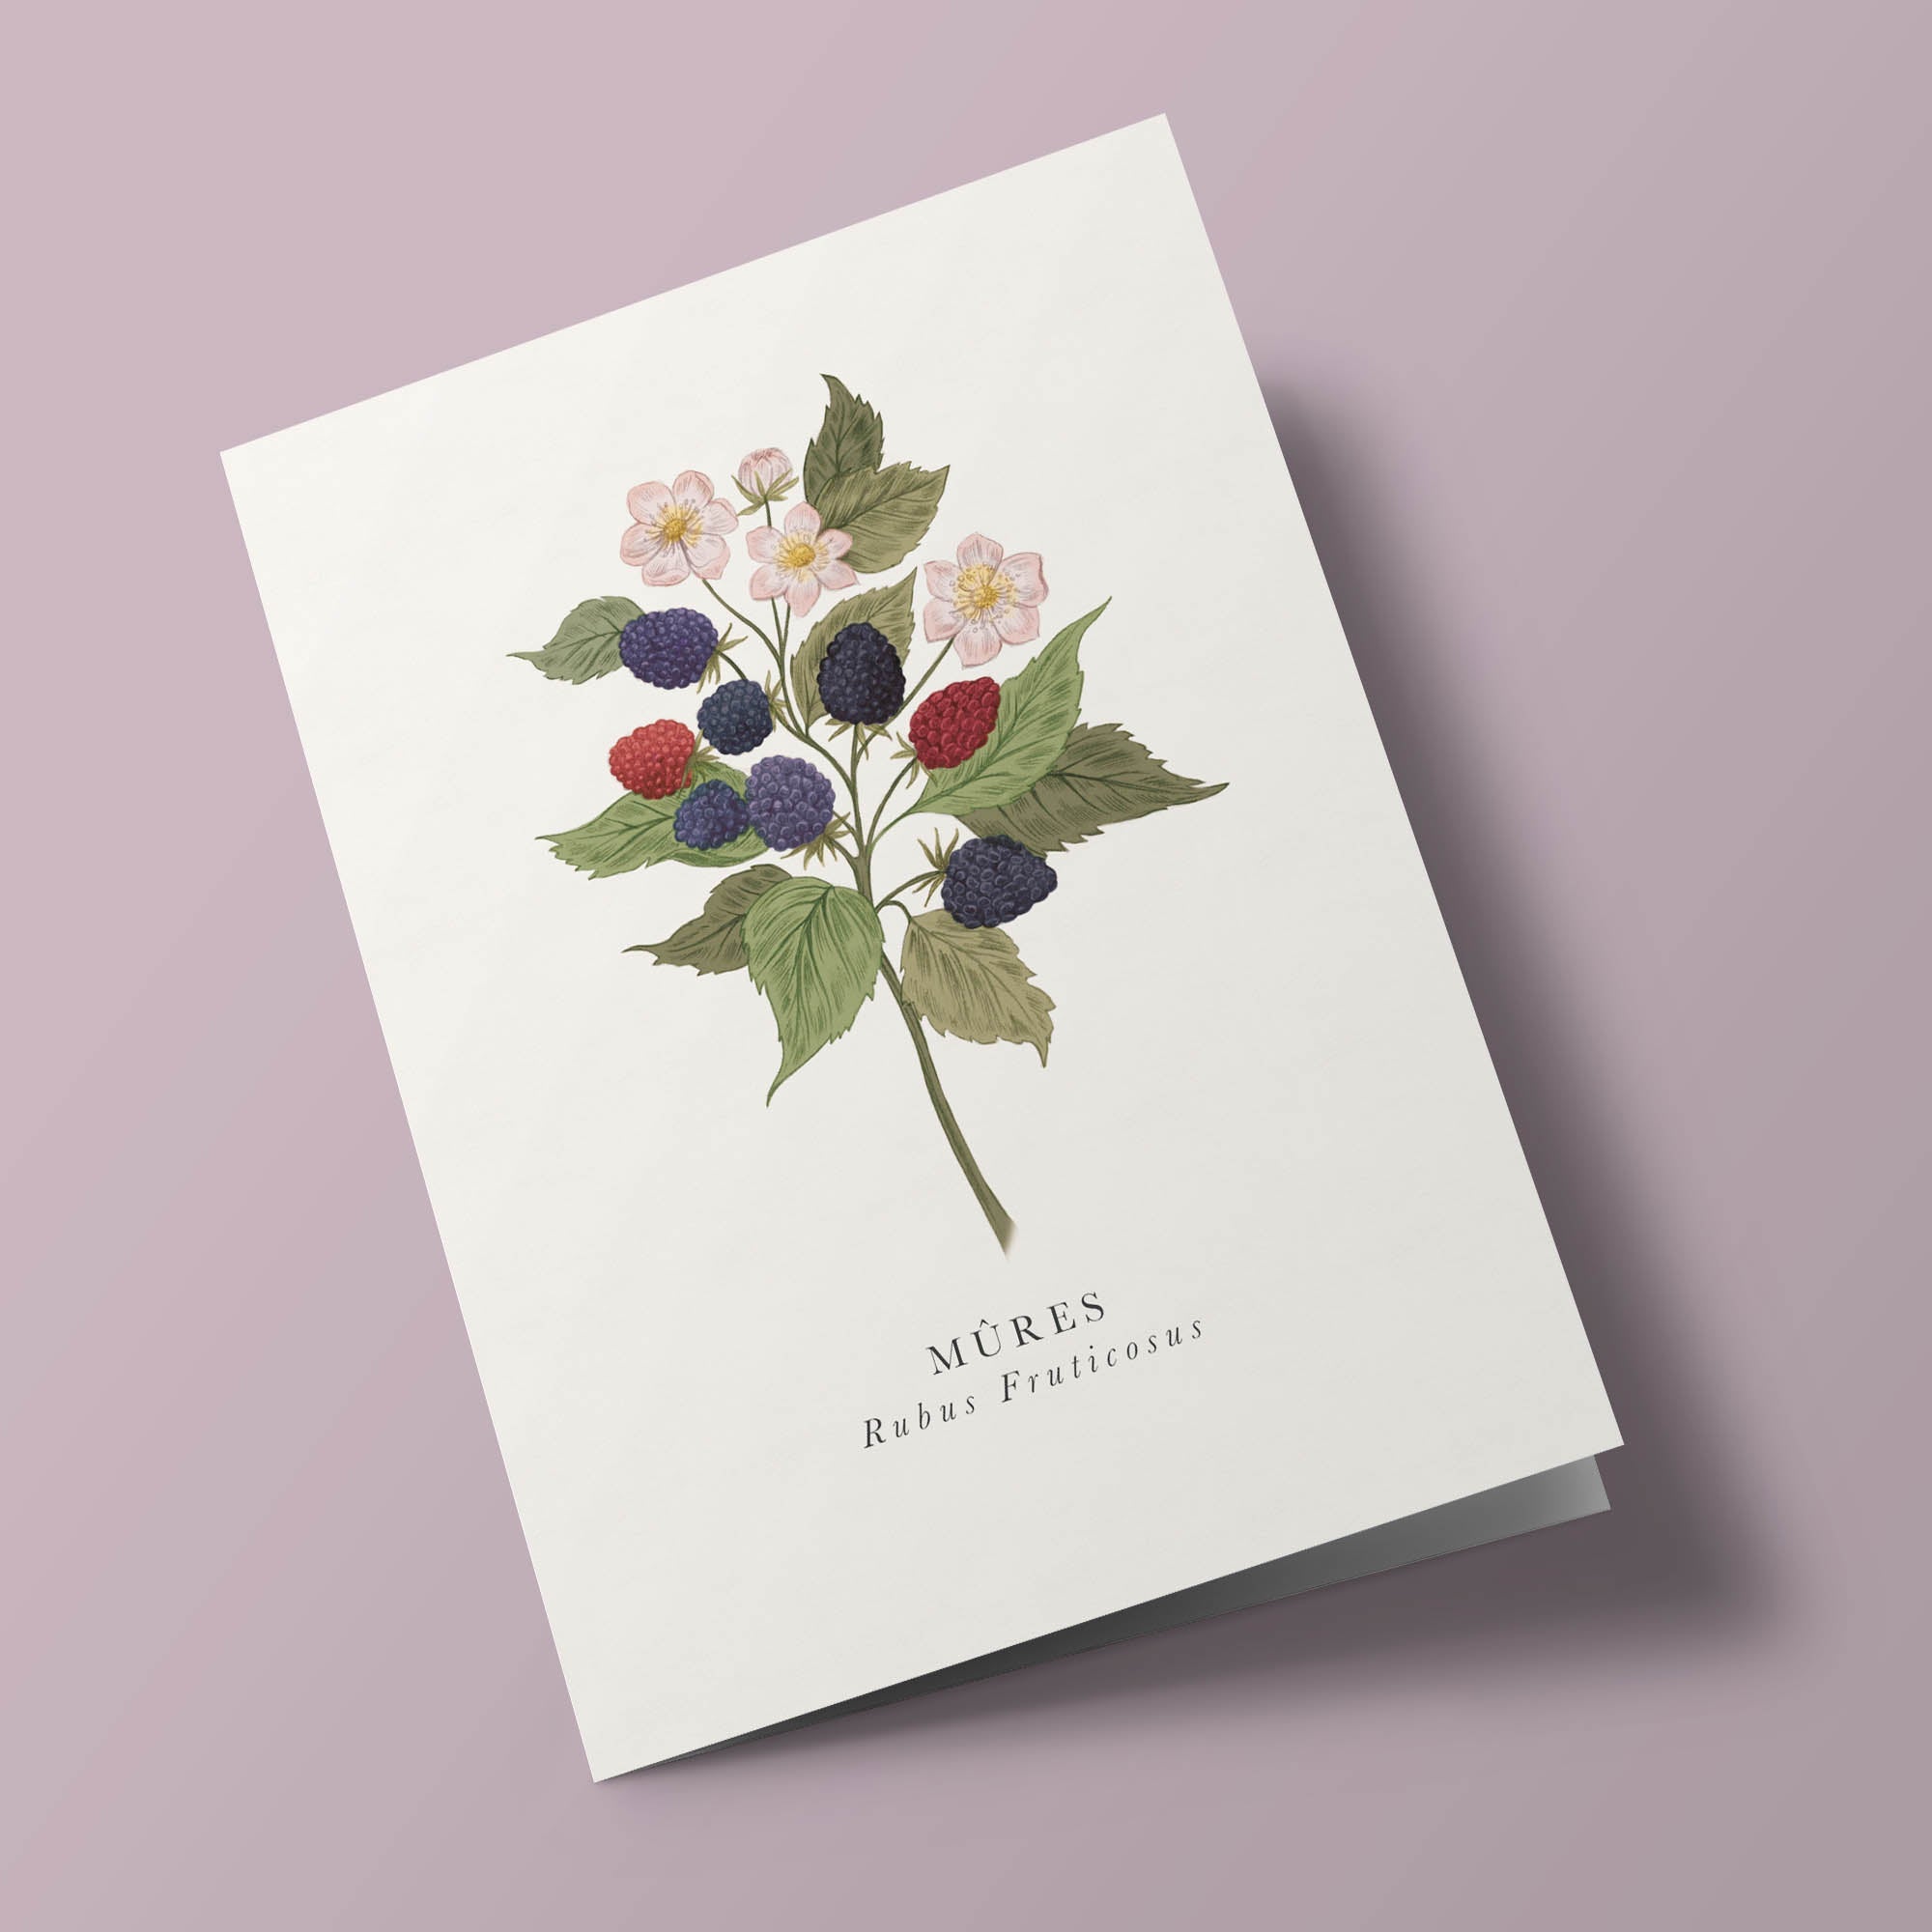 Book and botanics - Blackberries